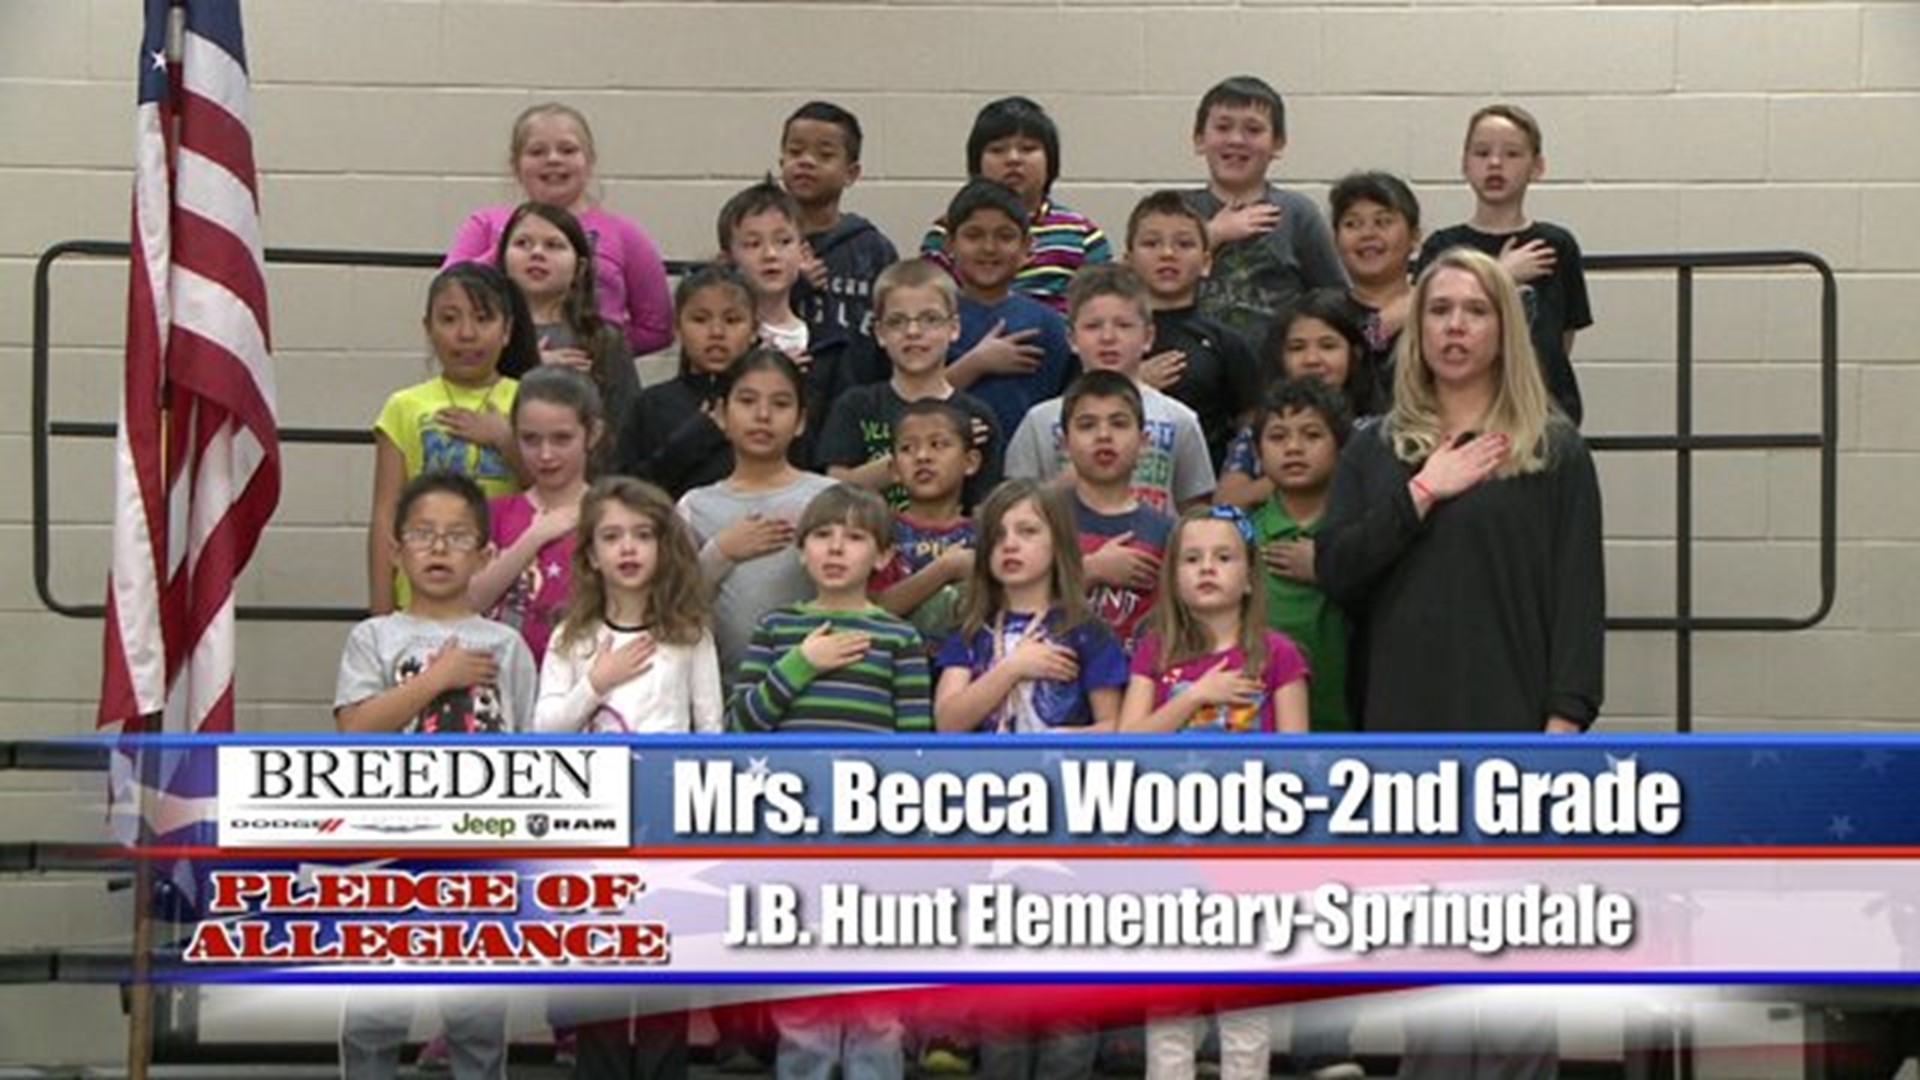 J.B. Hunt Elementary - Springdale, Mrs. Woods - Second Grade